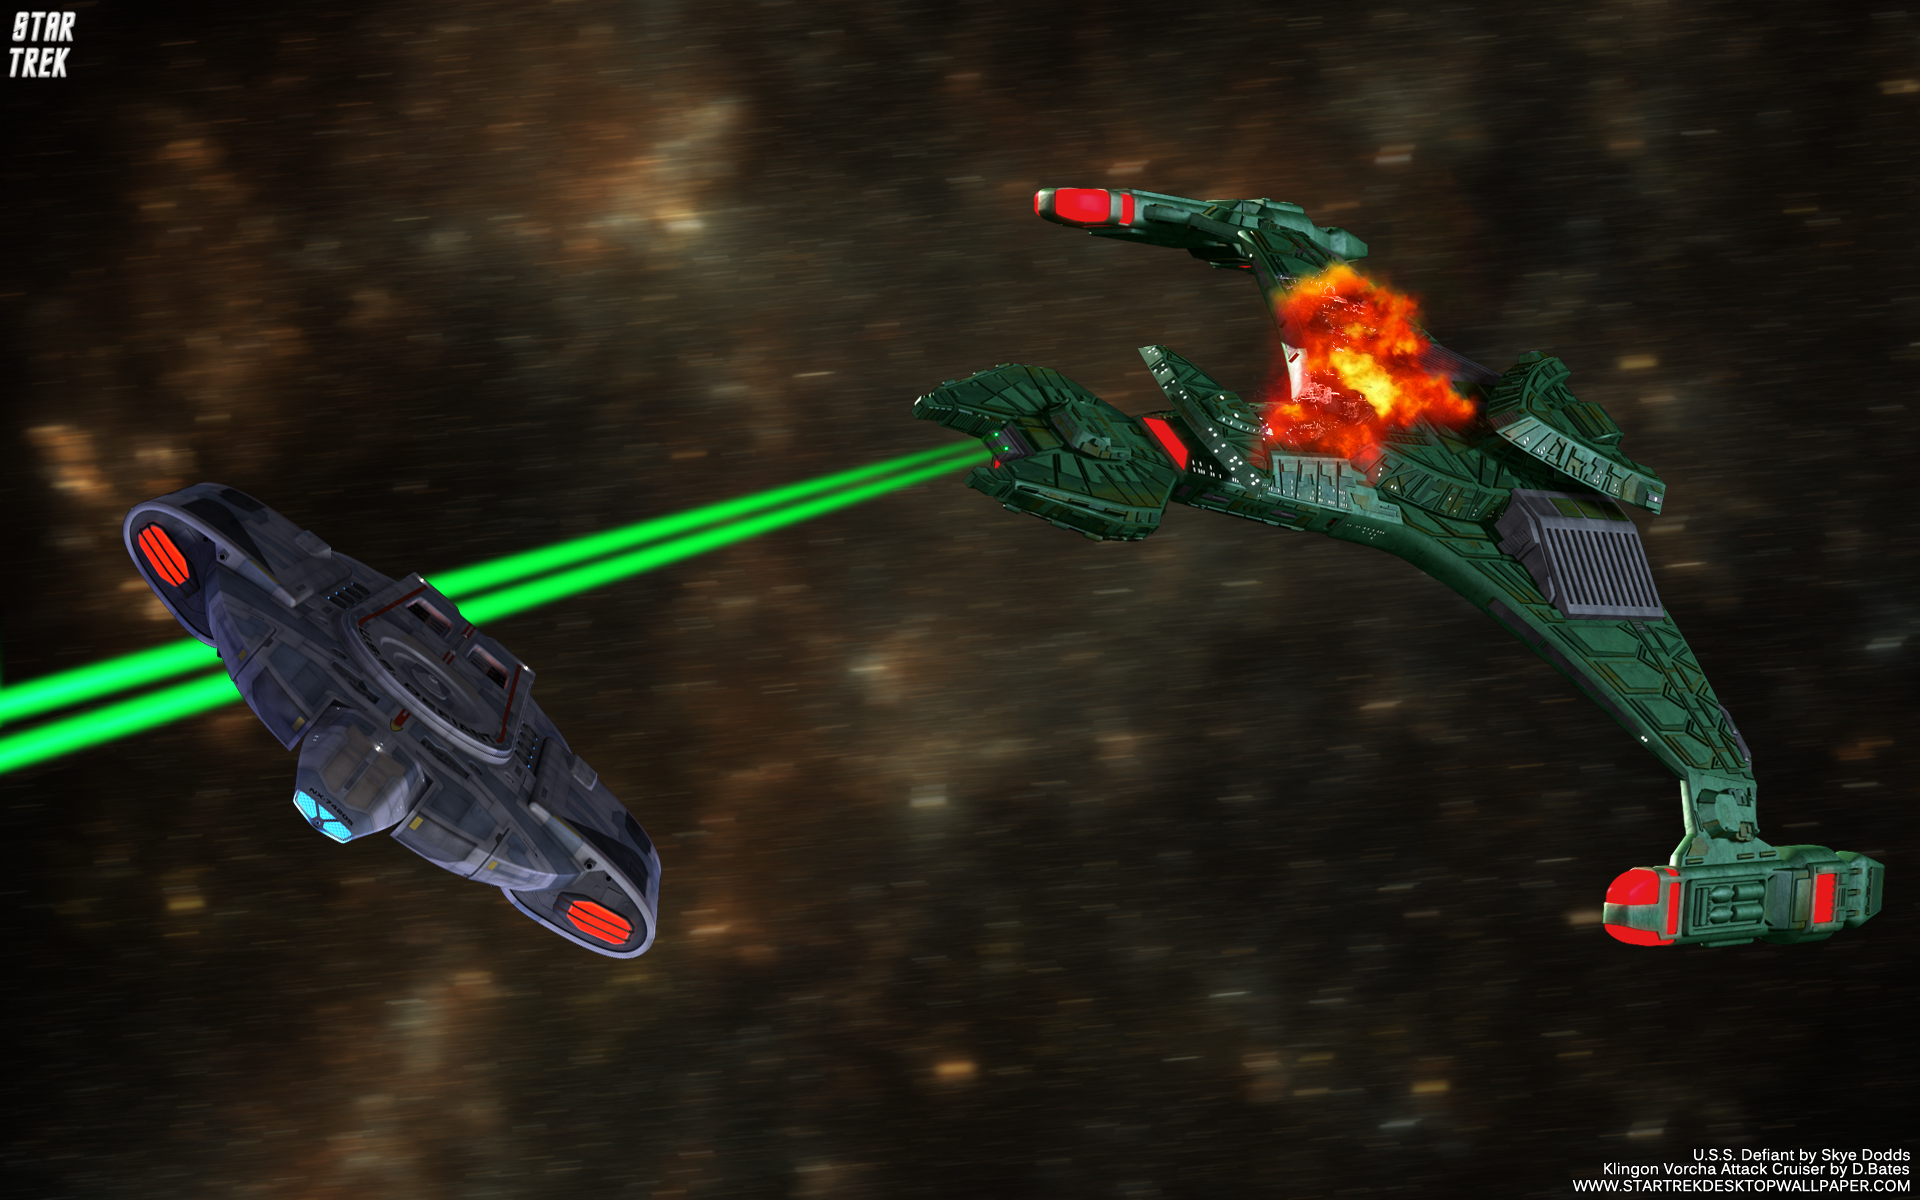 Star Trek Klingon Vor Cha Attack Cruiser Chasing Uss Defiant